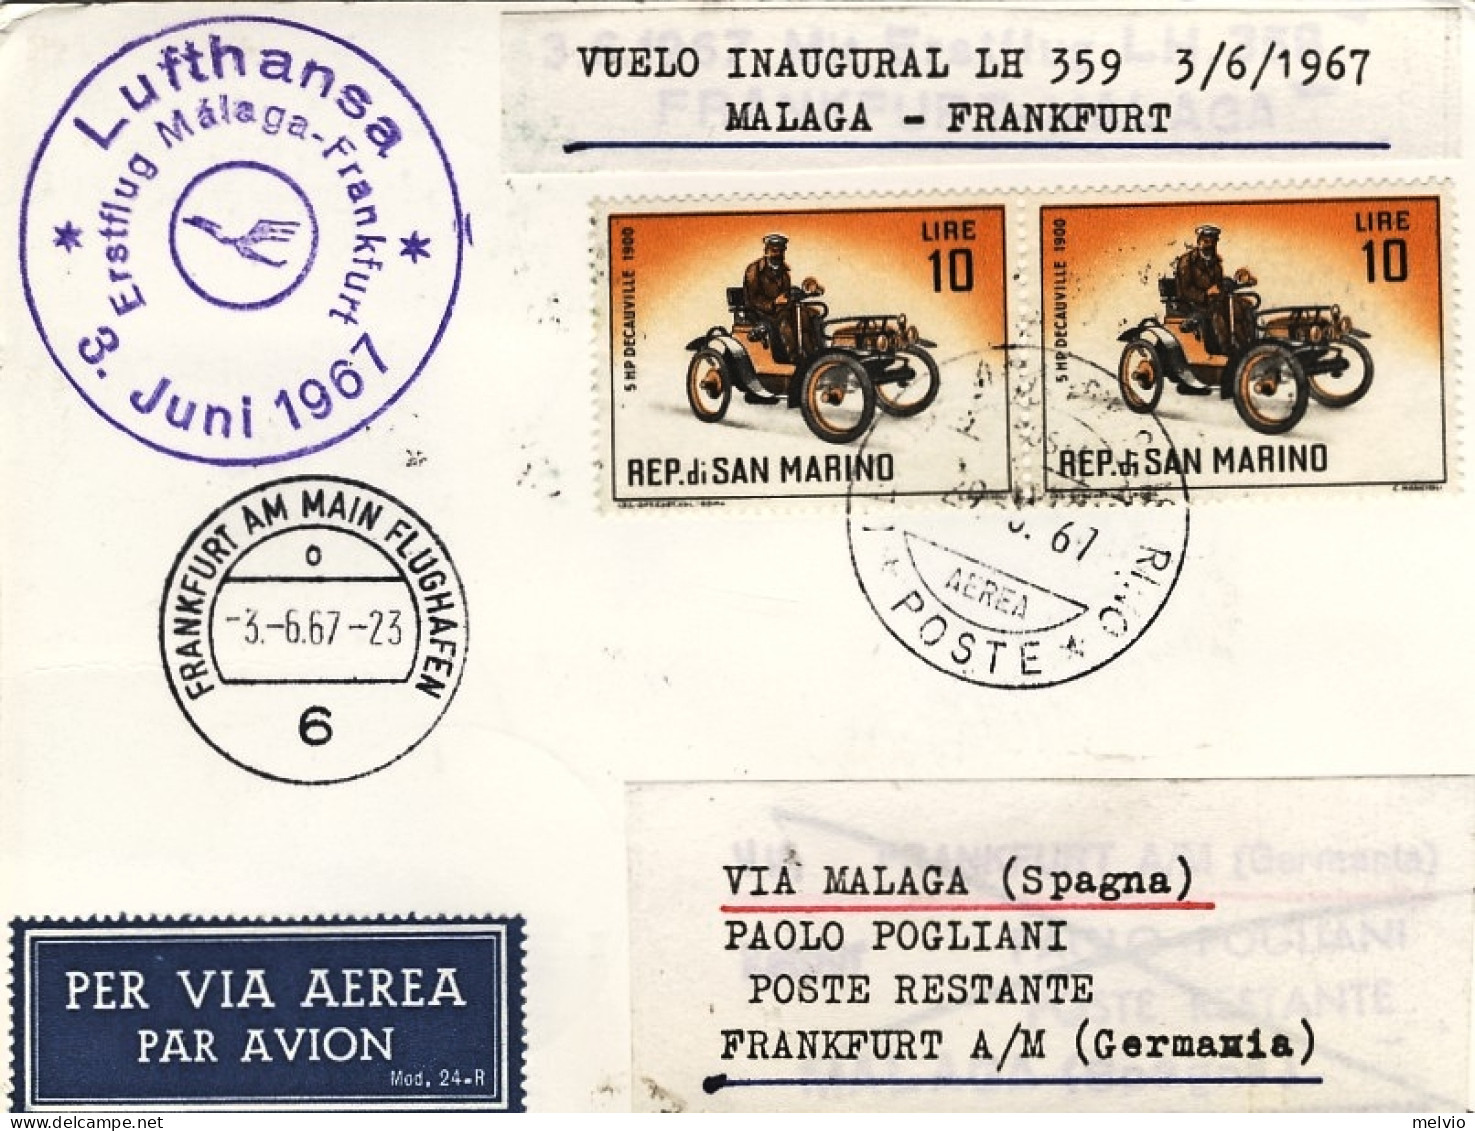 San Marino-1967 I^volo Lufthansa Malaga (Spagna) Francoforte - Airmail